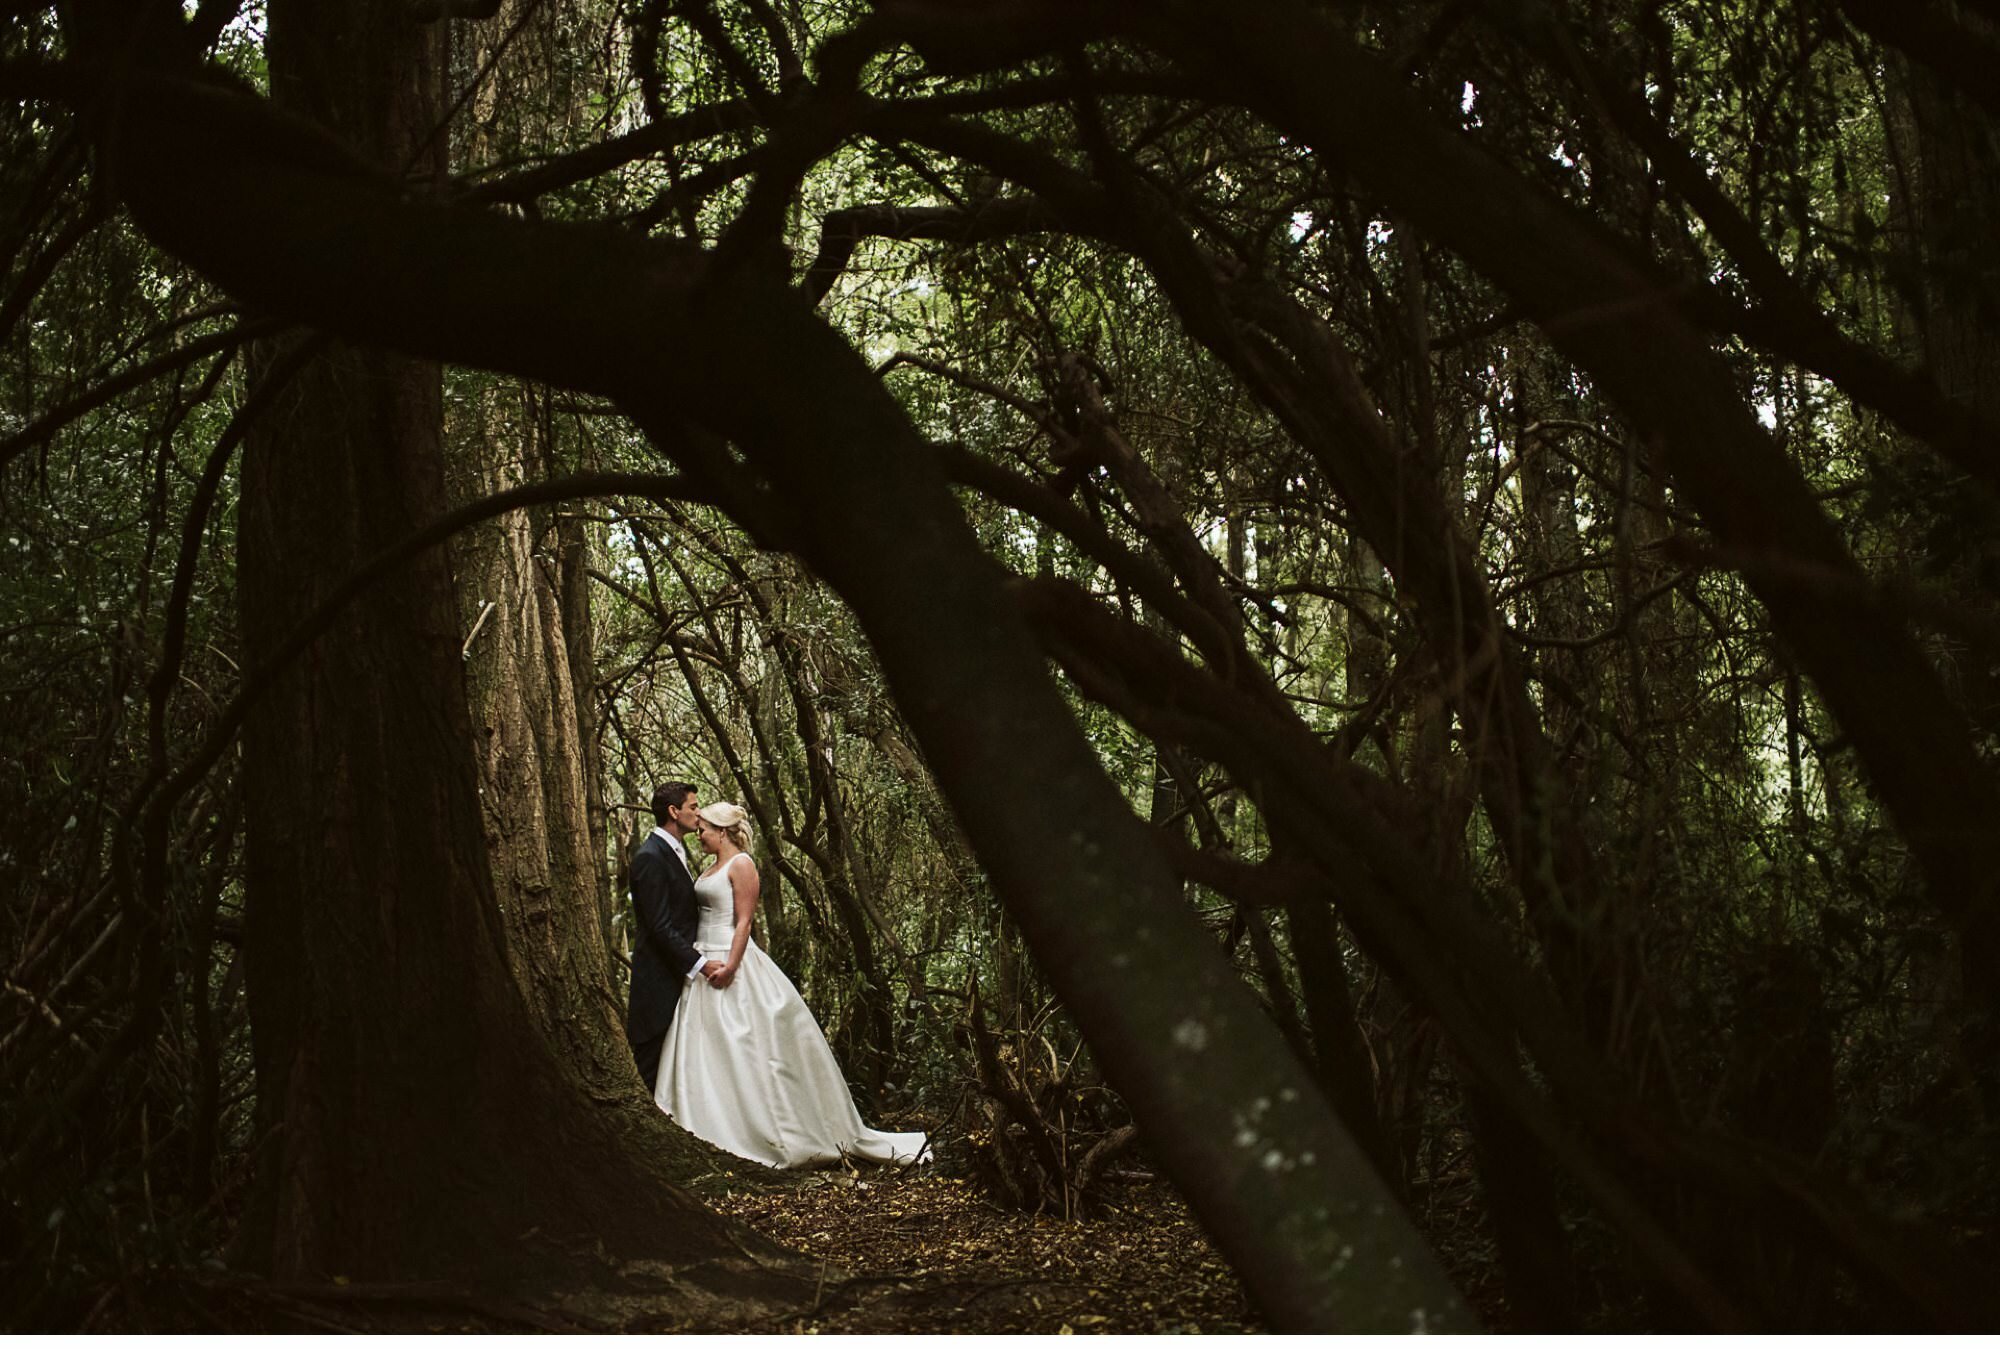 015 - New Zealand Wedding Photography Highlights.jpg